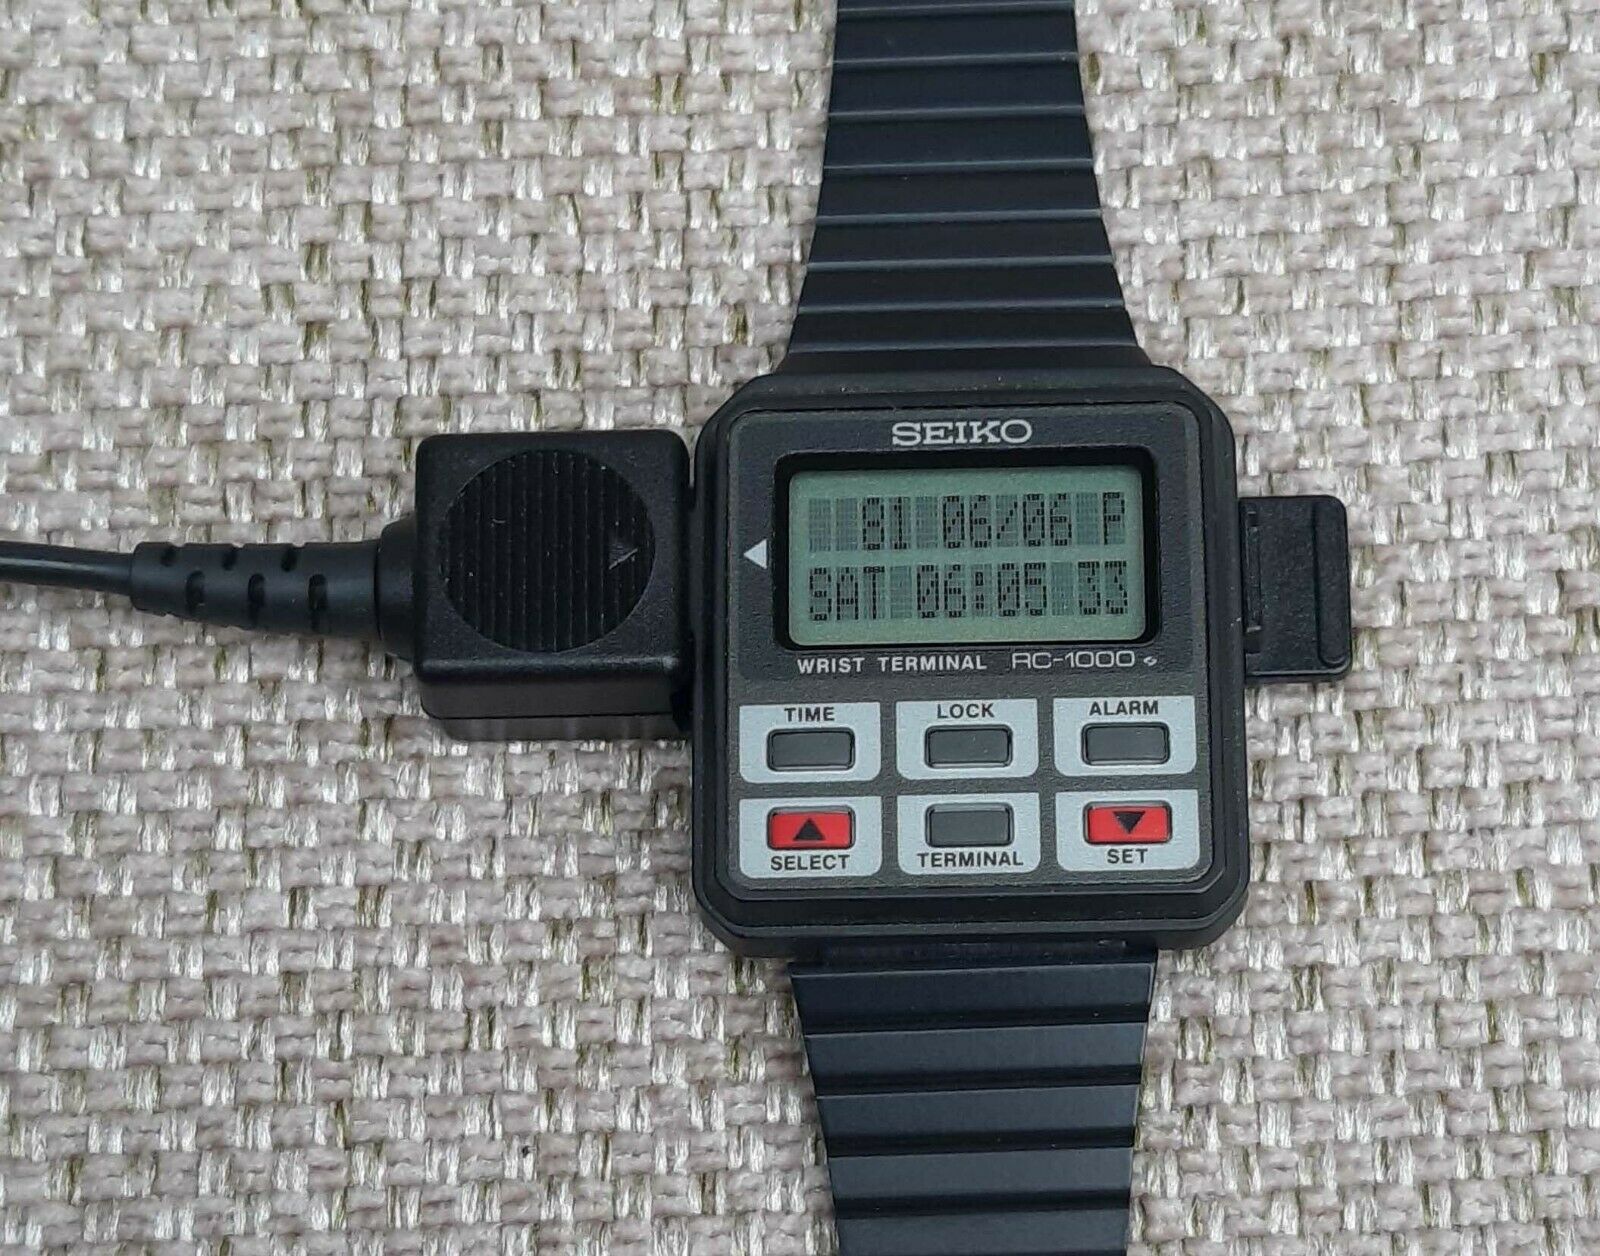 Seiko RC-1000 Wrist Terminal - RARE Vintage Digital Computer Watch |  WatchCharts